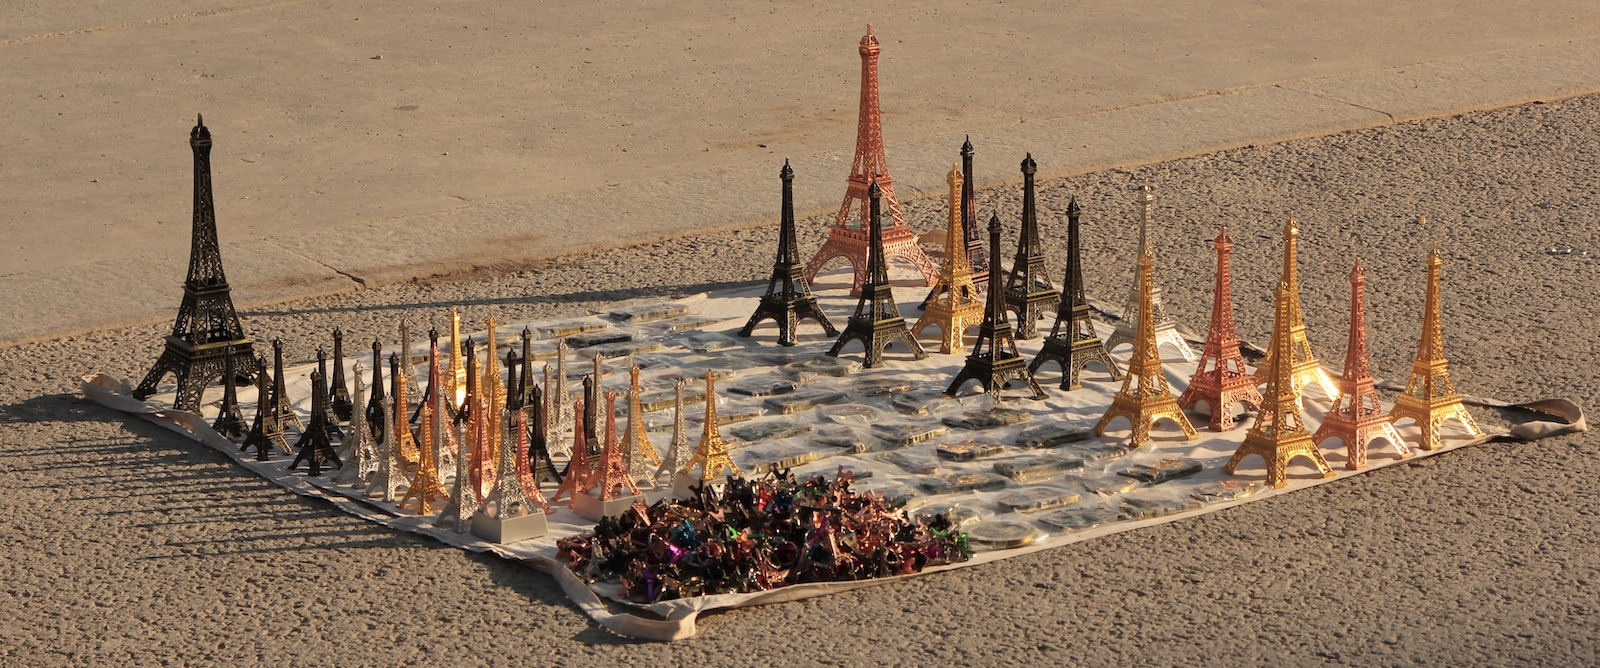 Eiffel Tower Vendor